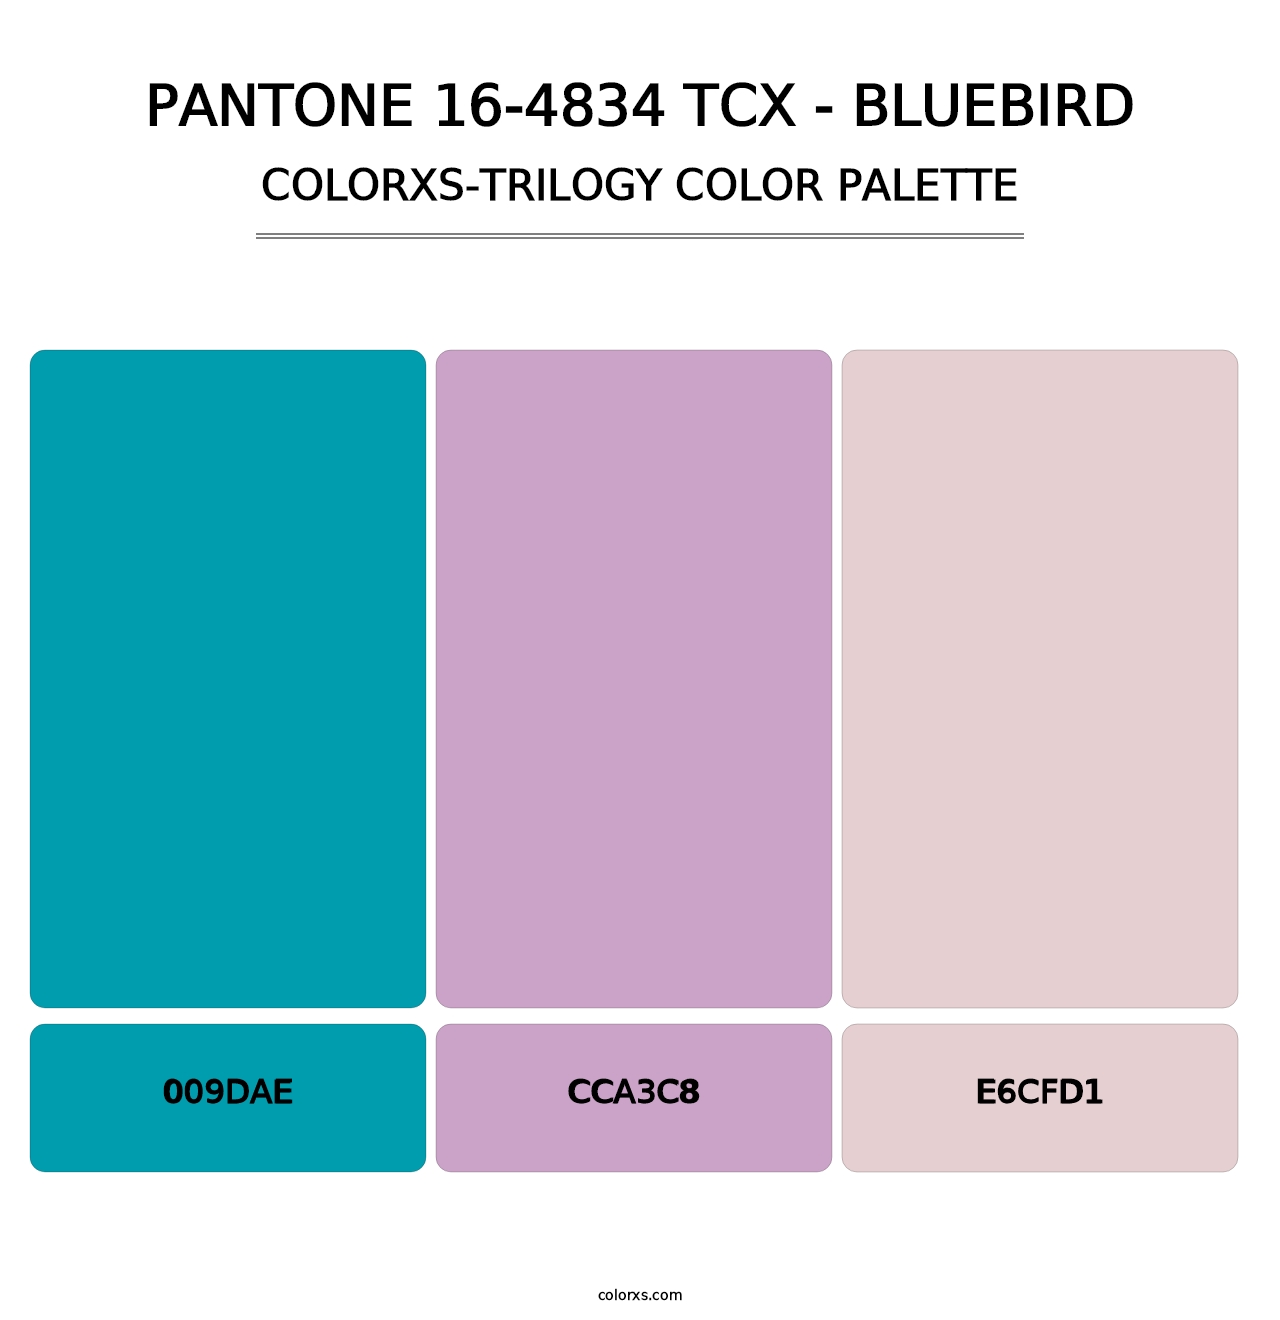 PANTONE 16-4834 TCX - Bluebird - Colorxs Trilogy Palette